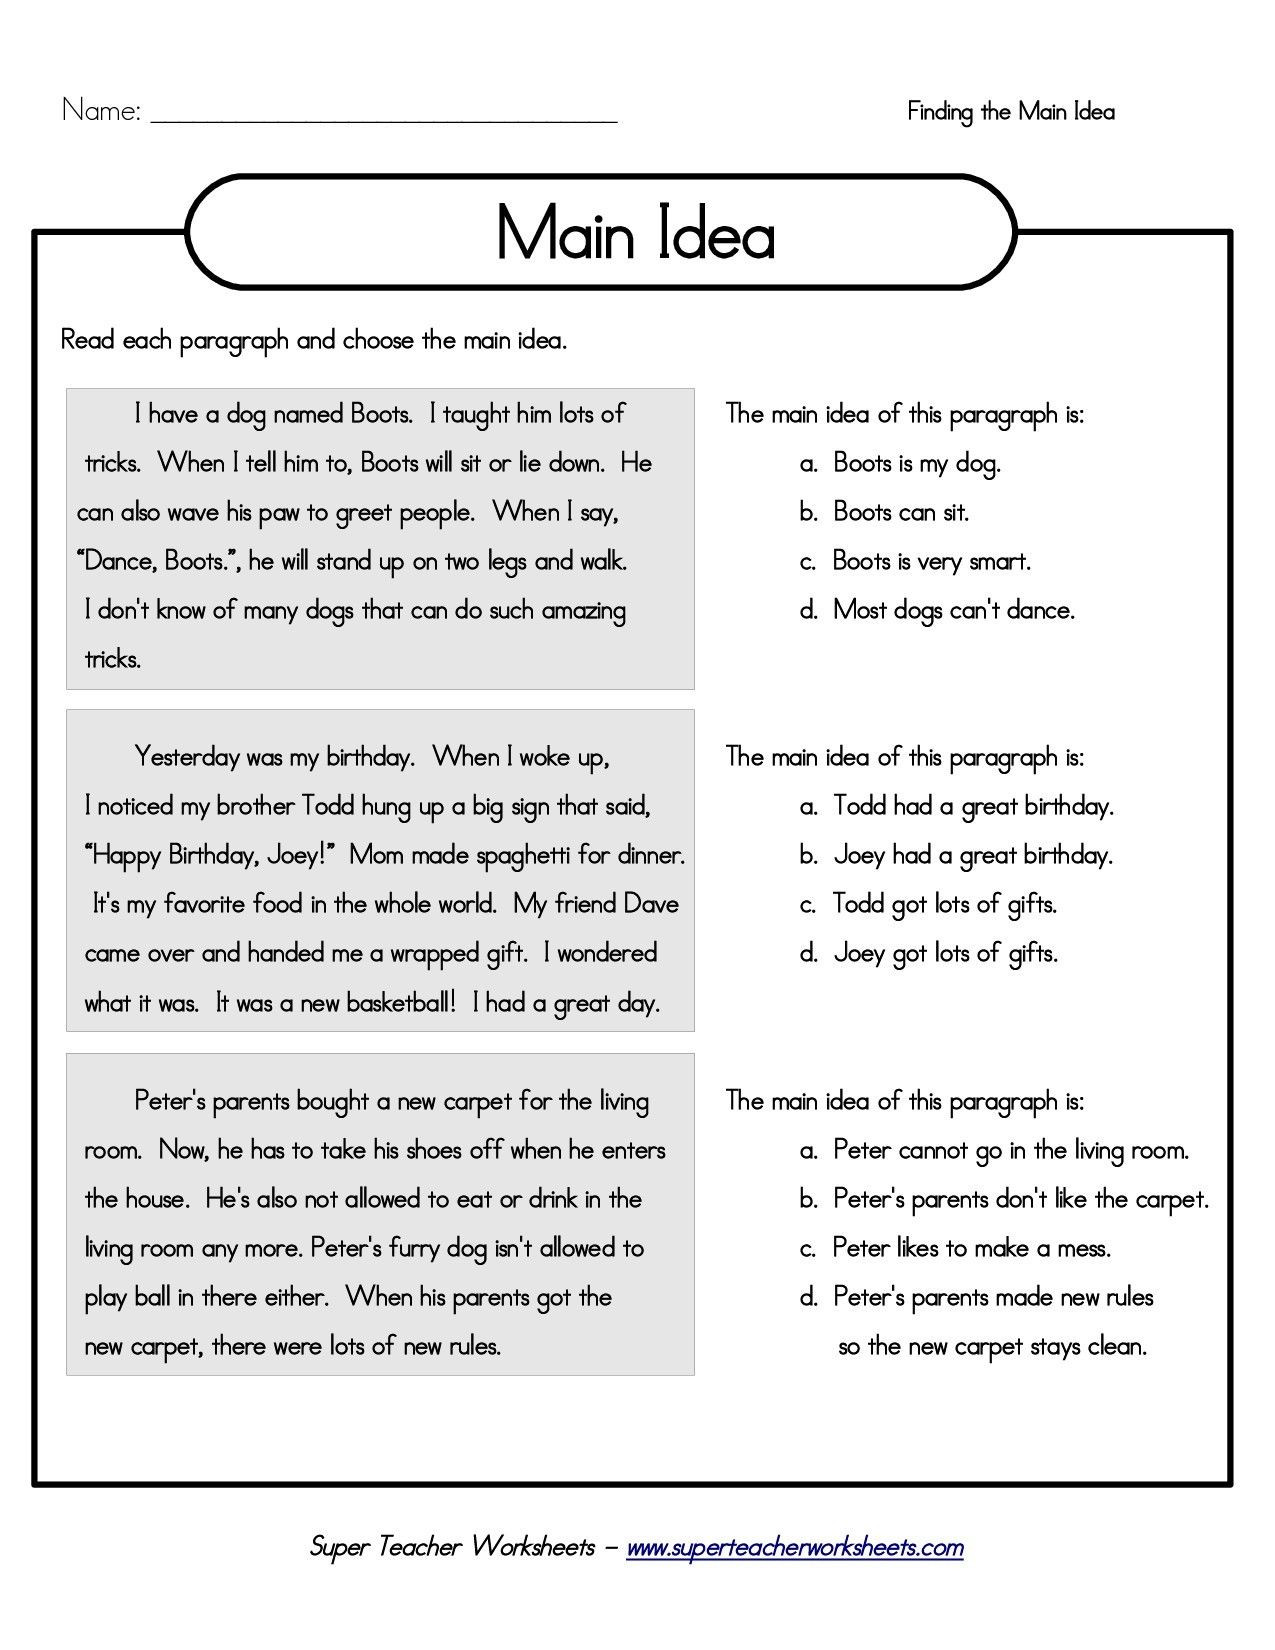 6th Grade Summarizing Worksheets Printable 5th Grade Main Idea Worksheets with Images